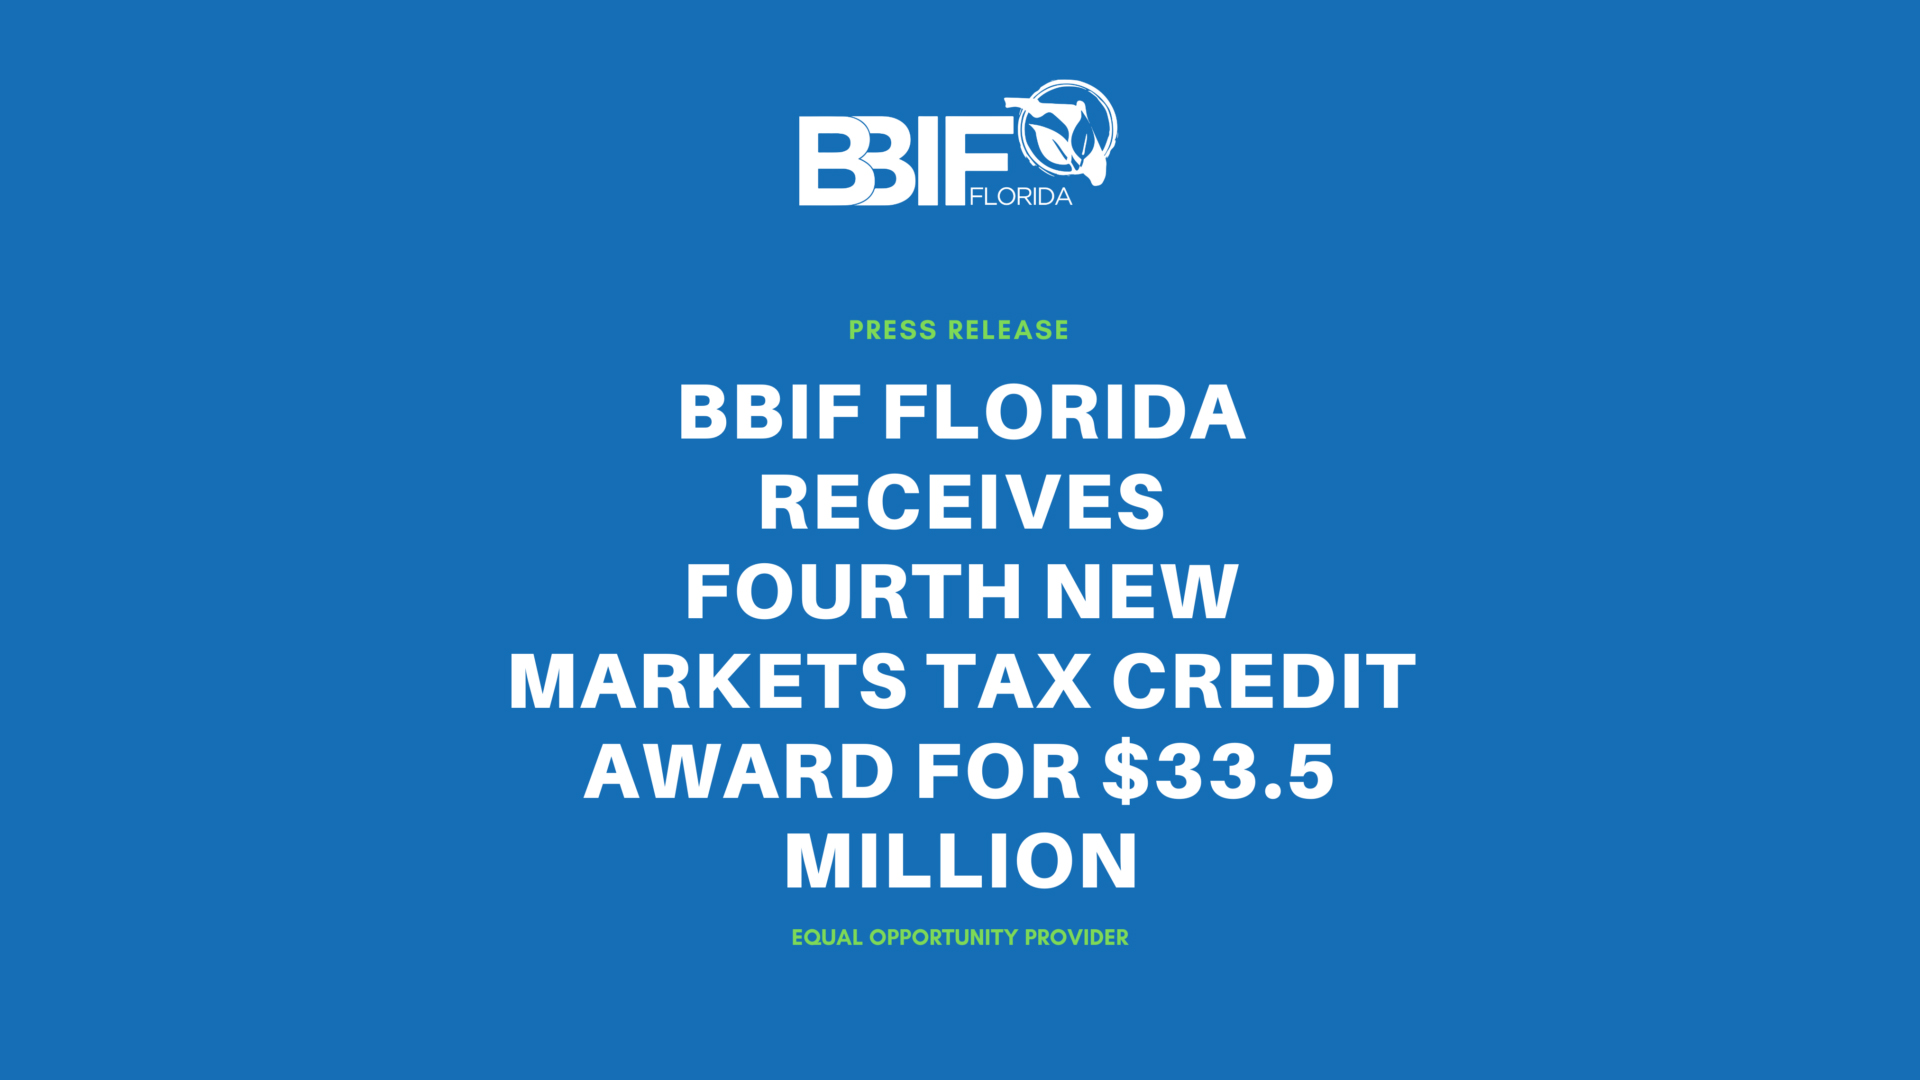 bbif-florida-receives-fourth-new-markets-tax-credit-award-for-33-5